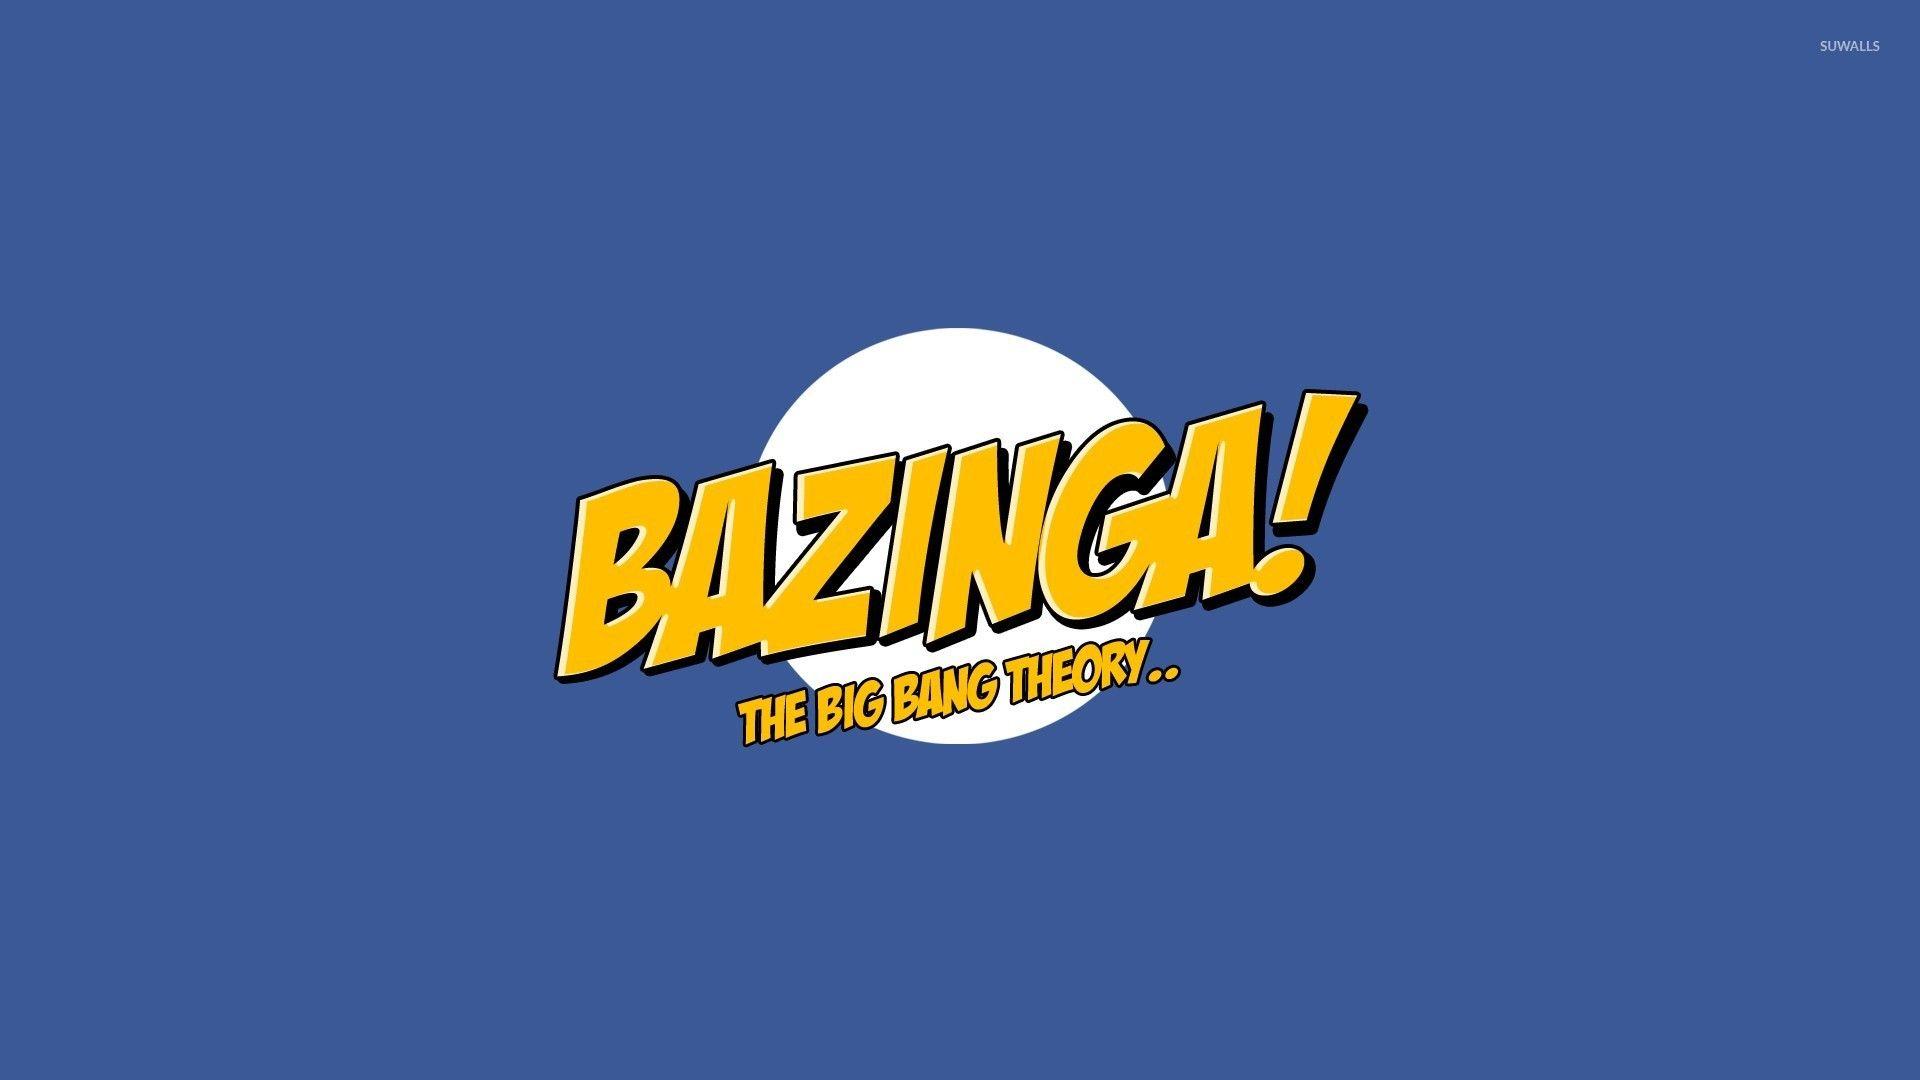 Bazinga Big Bang Theory wallpaper Show wallpaper